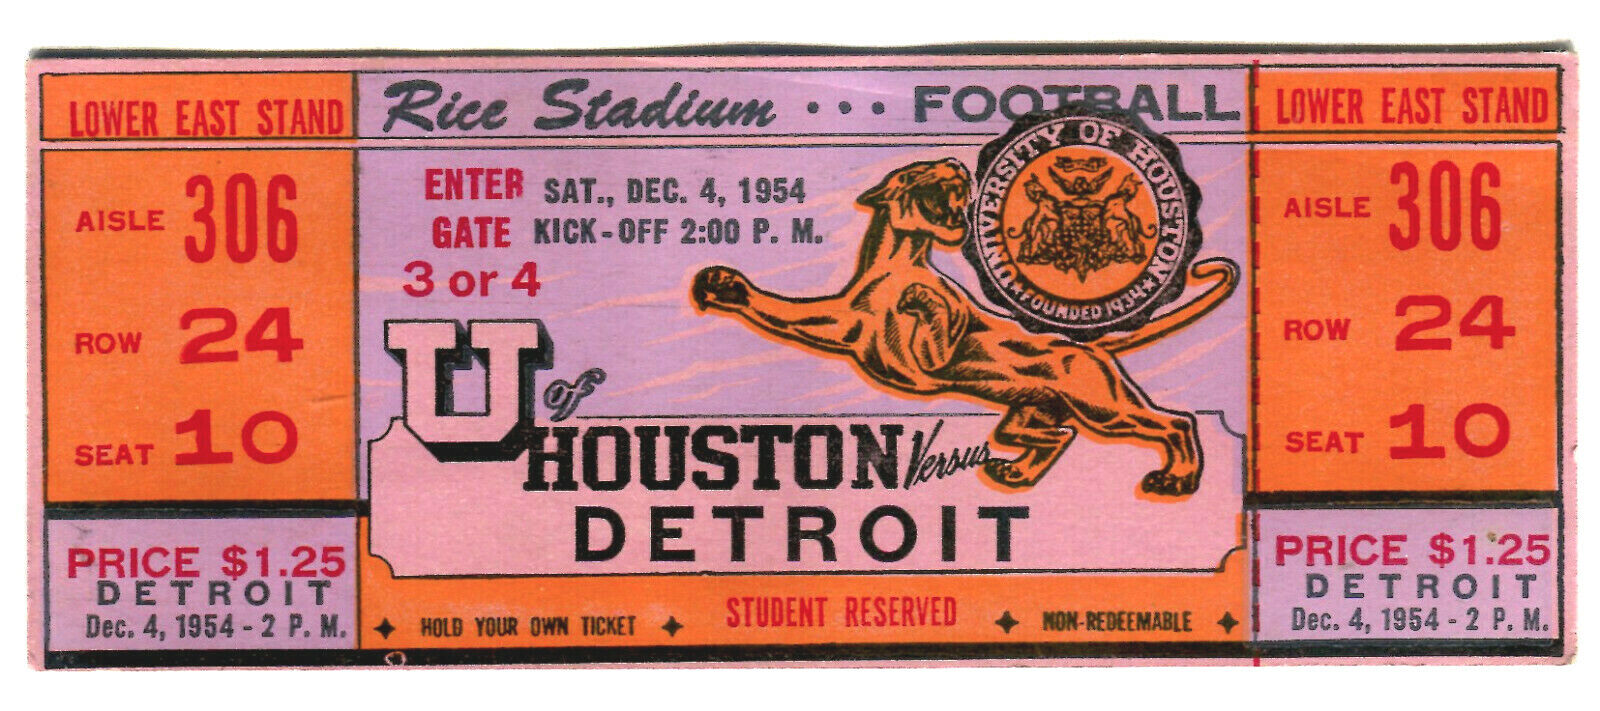 *SUPER VINTAGE 1954 COLLEGE FOOTBALL FULL TICKET 12/4/54 HOUSTON VS. DETROIT